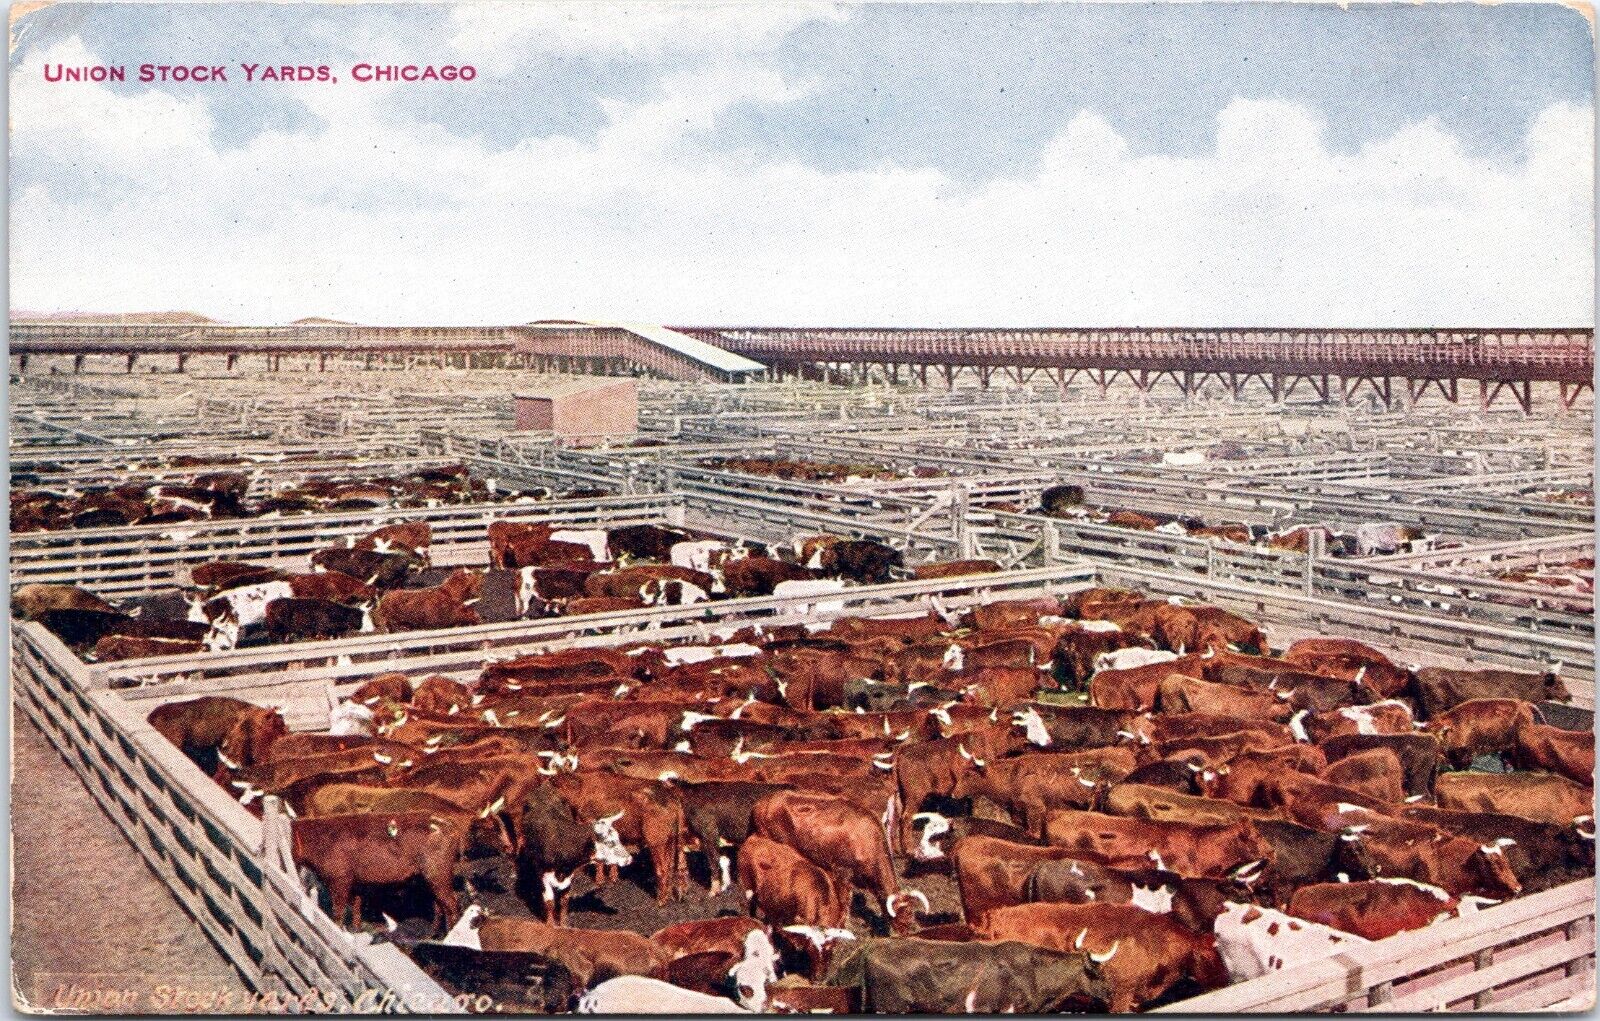 Union Stock Yards, Chicago, Illinois - Vintage d/b Postcard c1910s - Cattle